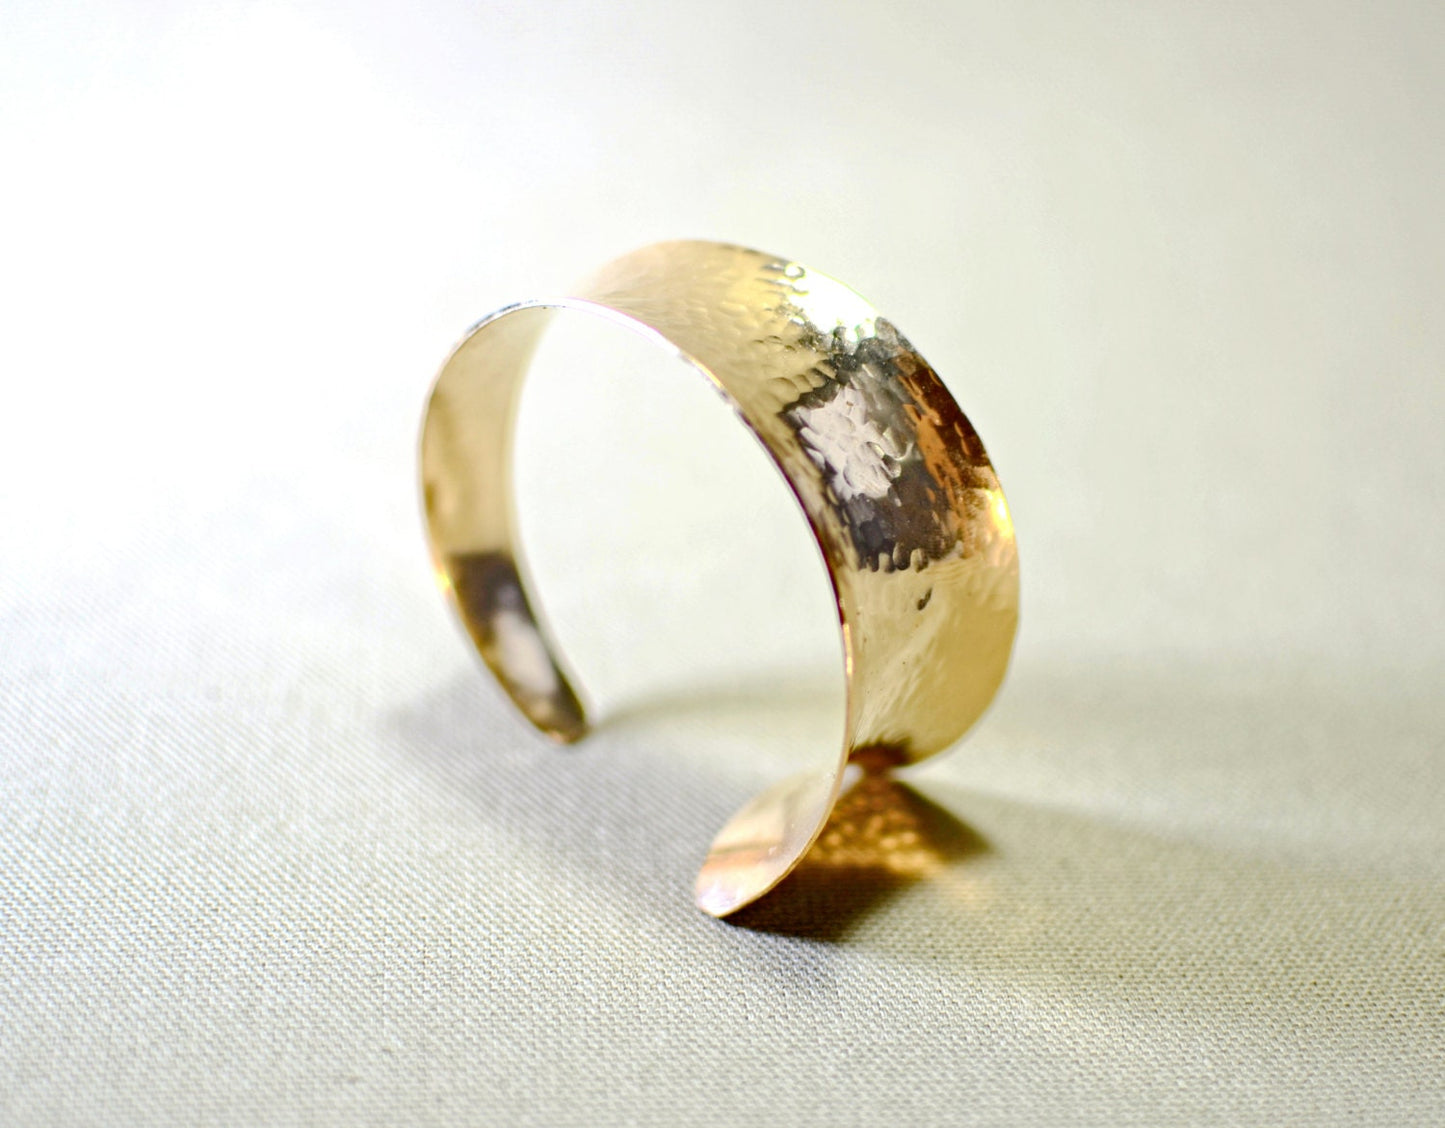 Bronze anticlastic shaped bracelet with asymmetrical design